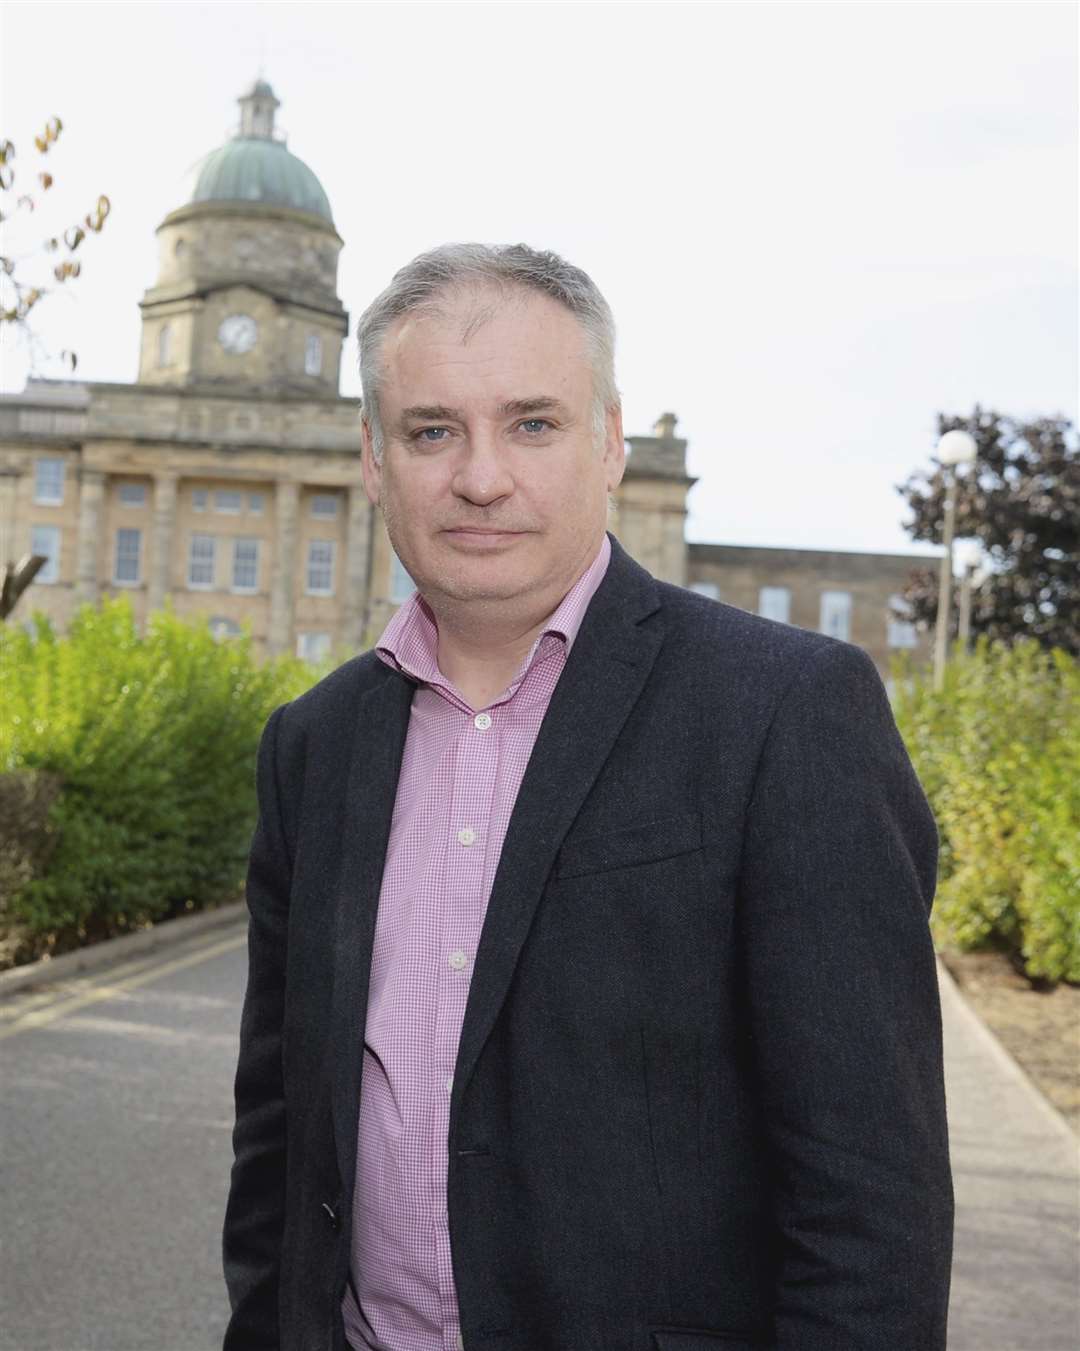 Richard Lochhead, SNP MSP for Moray. Picture: Daniel Forsyth